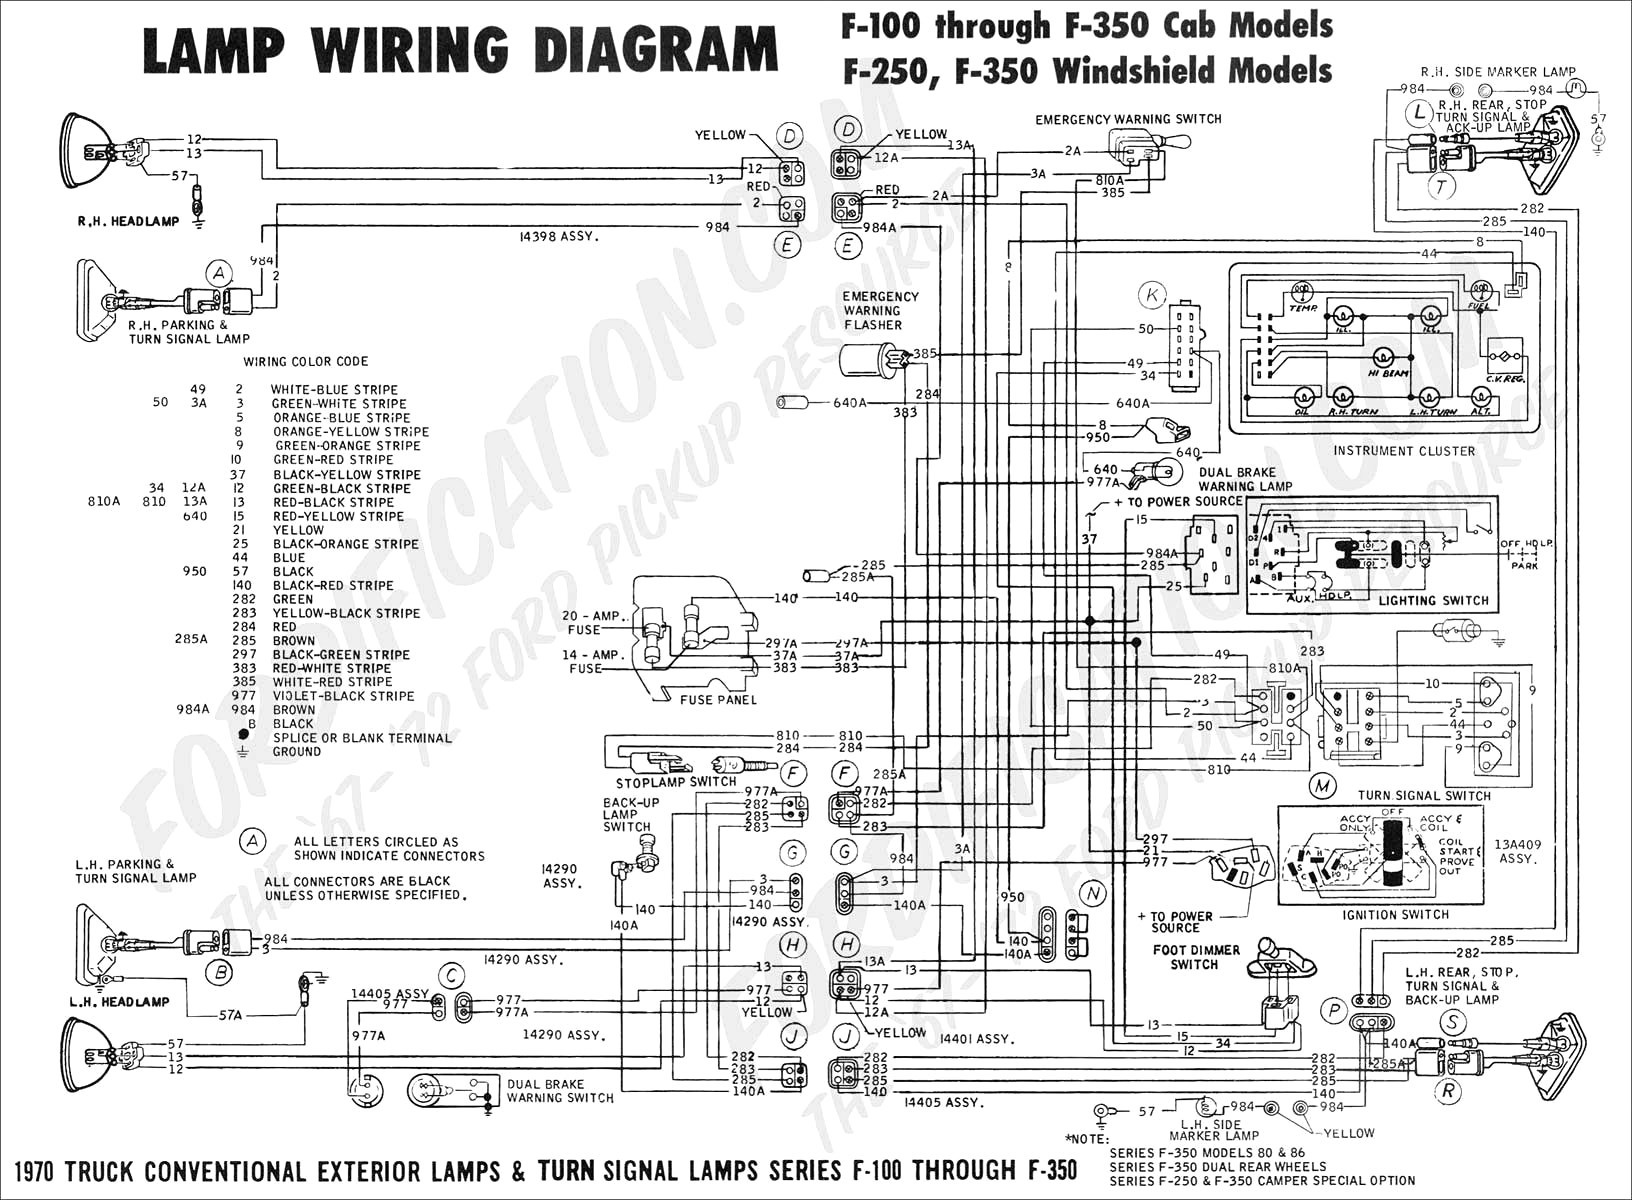 2004 ford Ranger Engine Diagram Mustang Wiring Diagram fordr Stereo Explorer Sport Trac Car Radio Of 2004 ford Ranger Engine Diagram